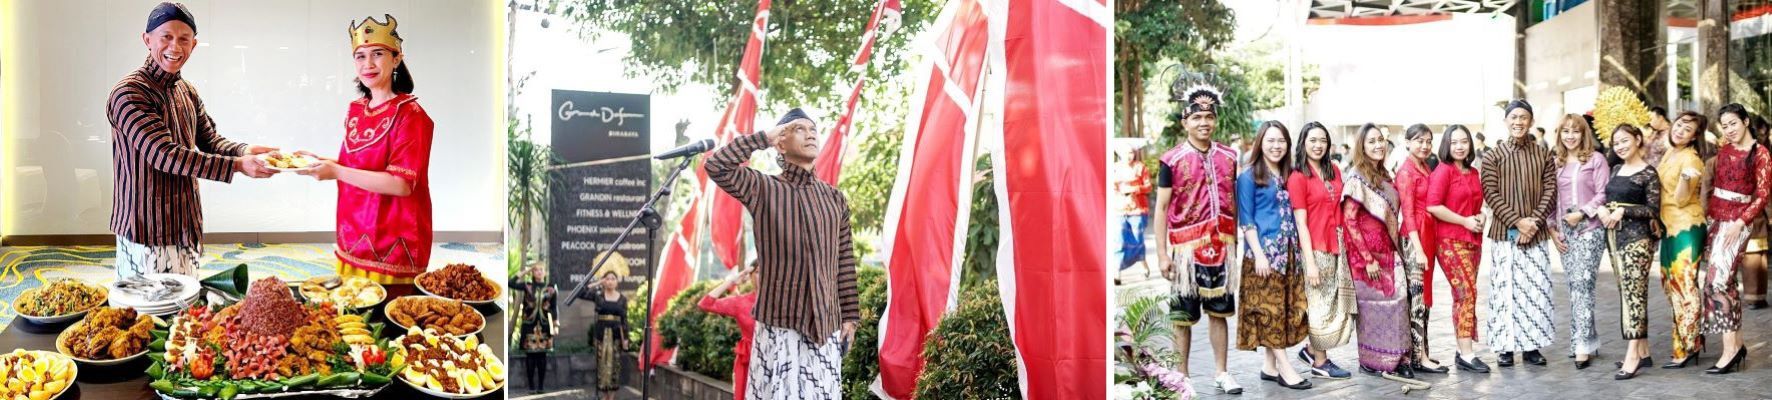 Grand Dafam Signature Surabaya Ajak Tamu Ikut Upacara Bendera, Bikin Tumpeng Kemerdekaan